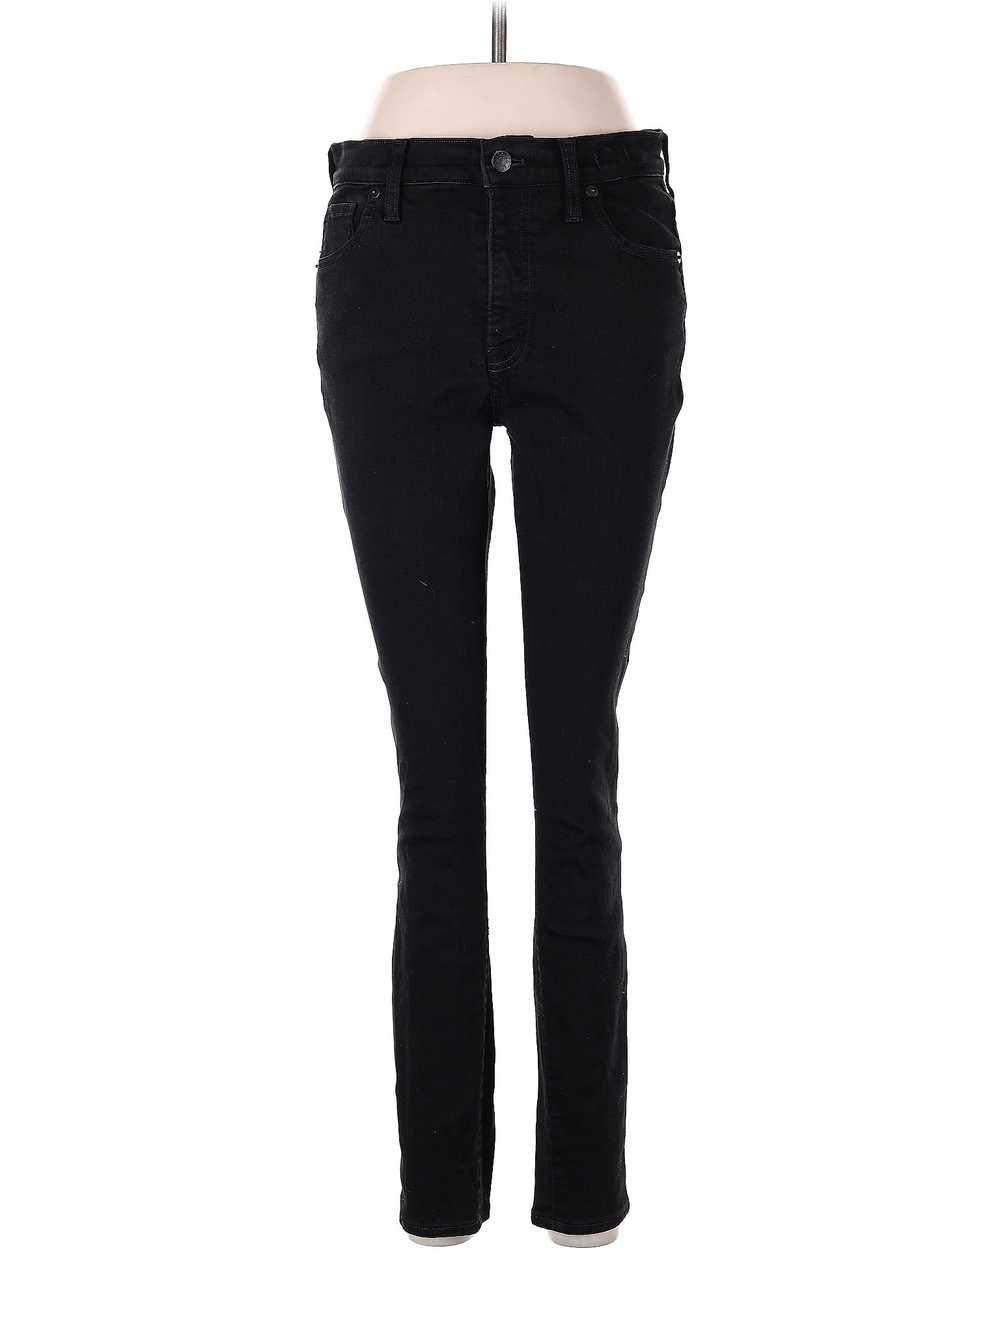 Madewell Women Black Jeans 29W - image 1